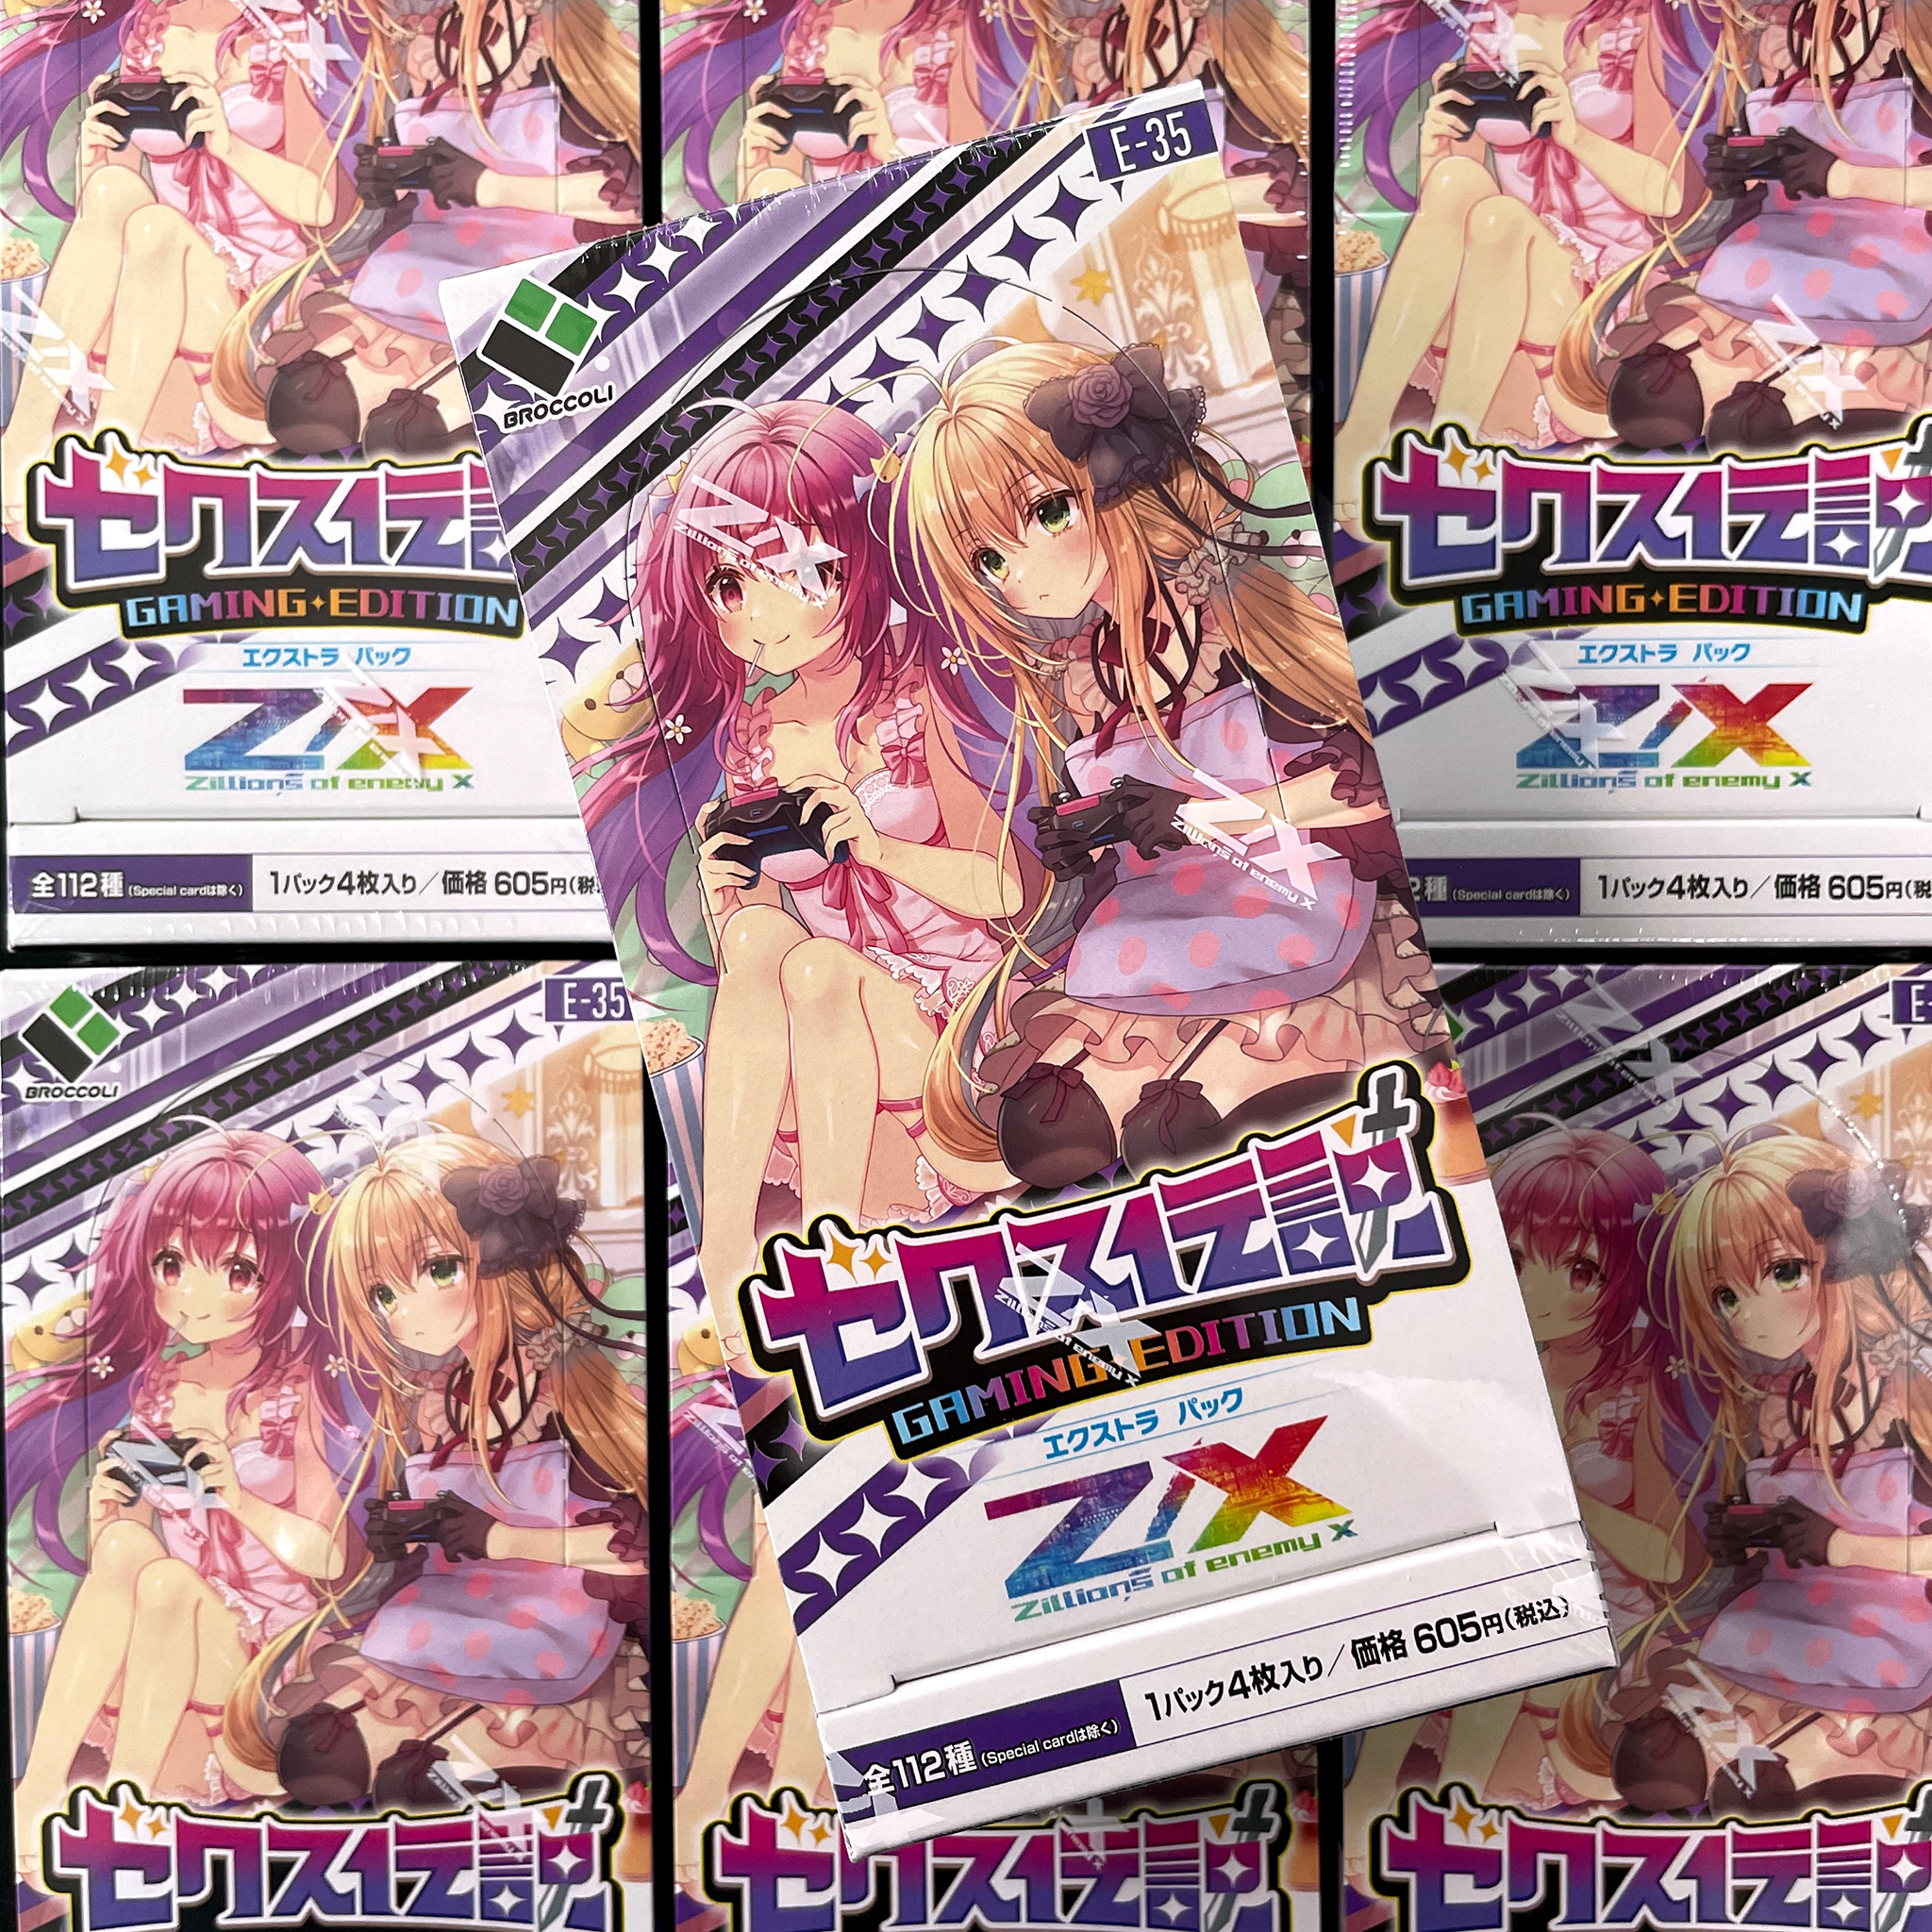 [E-35] Z/X Zillions of enemy X EXTRA Pack 第35弾 ｢Zekkusu Legend GAMING EDITION｣ Box